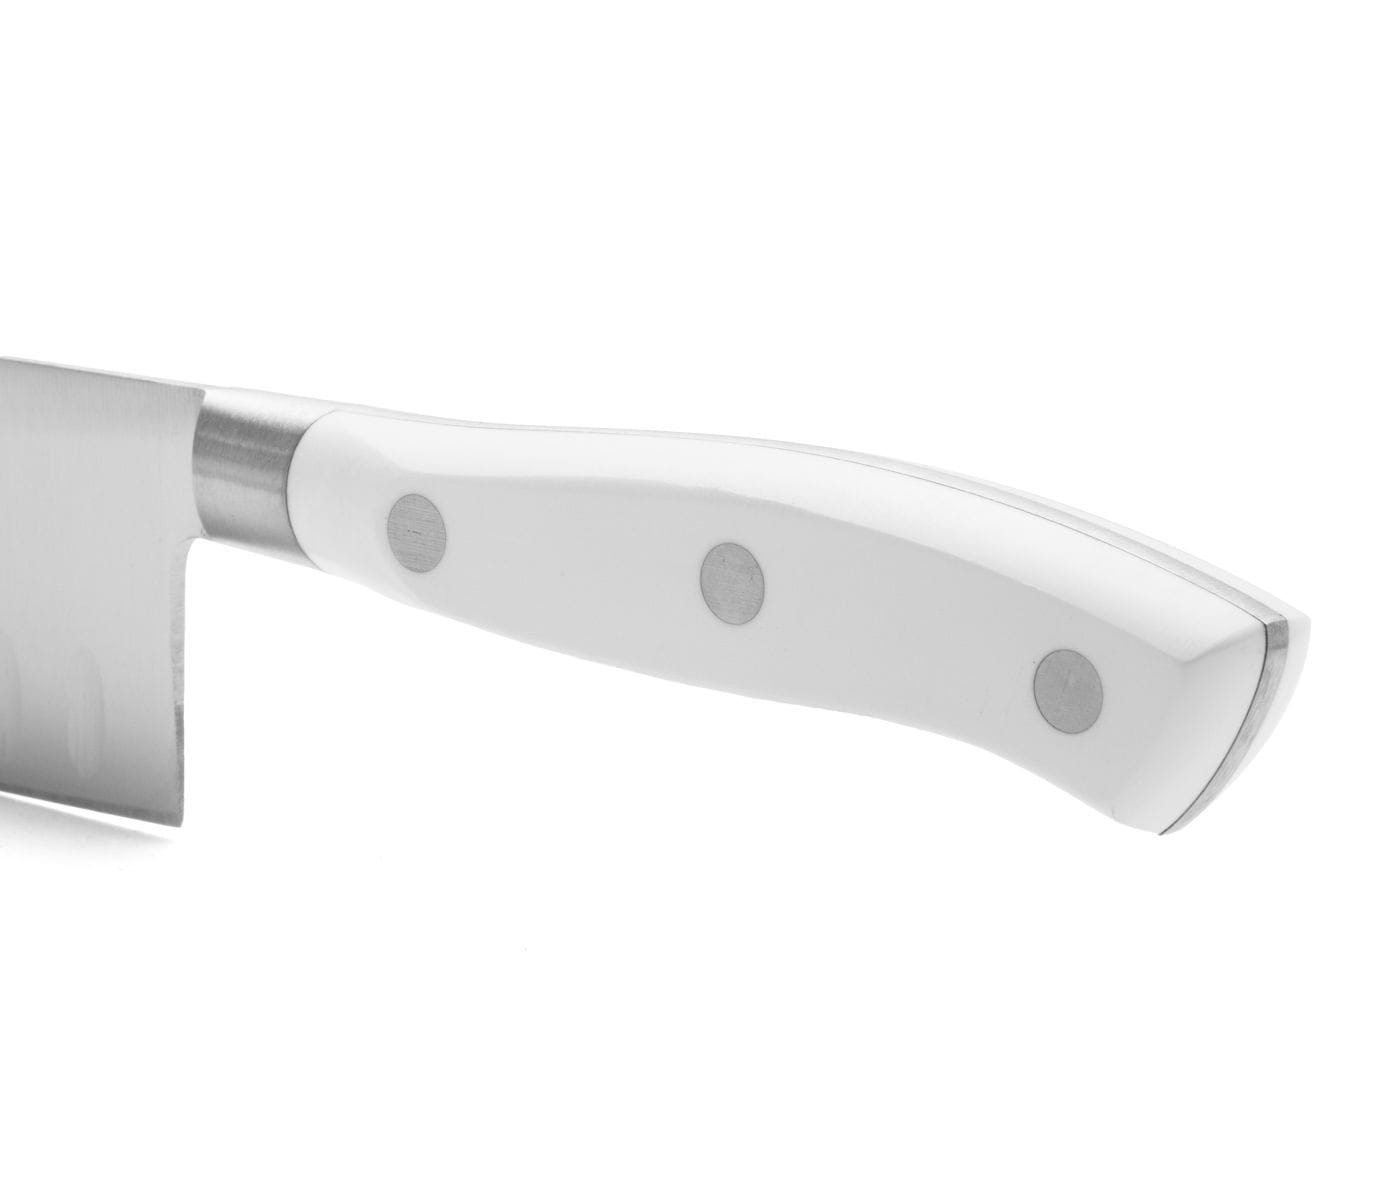 INNOVATIONwhite™ 5.5 Ceramic Santoku Knife - White Z212 Blade with  Non-Slip Blue Handle